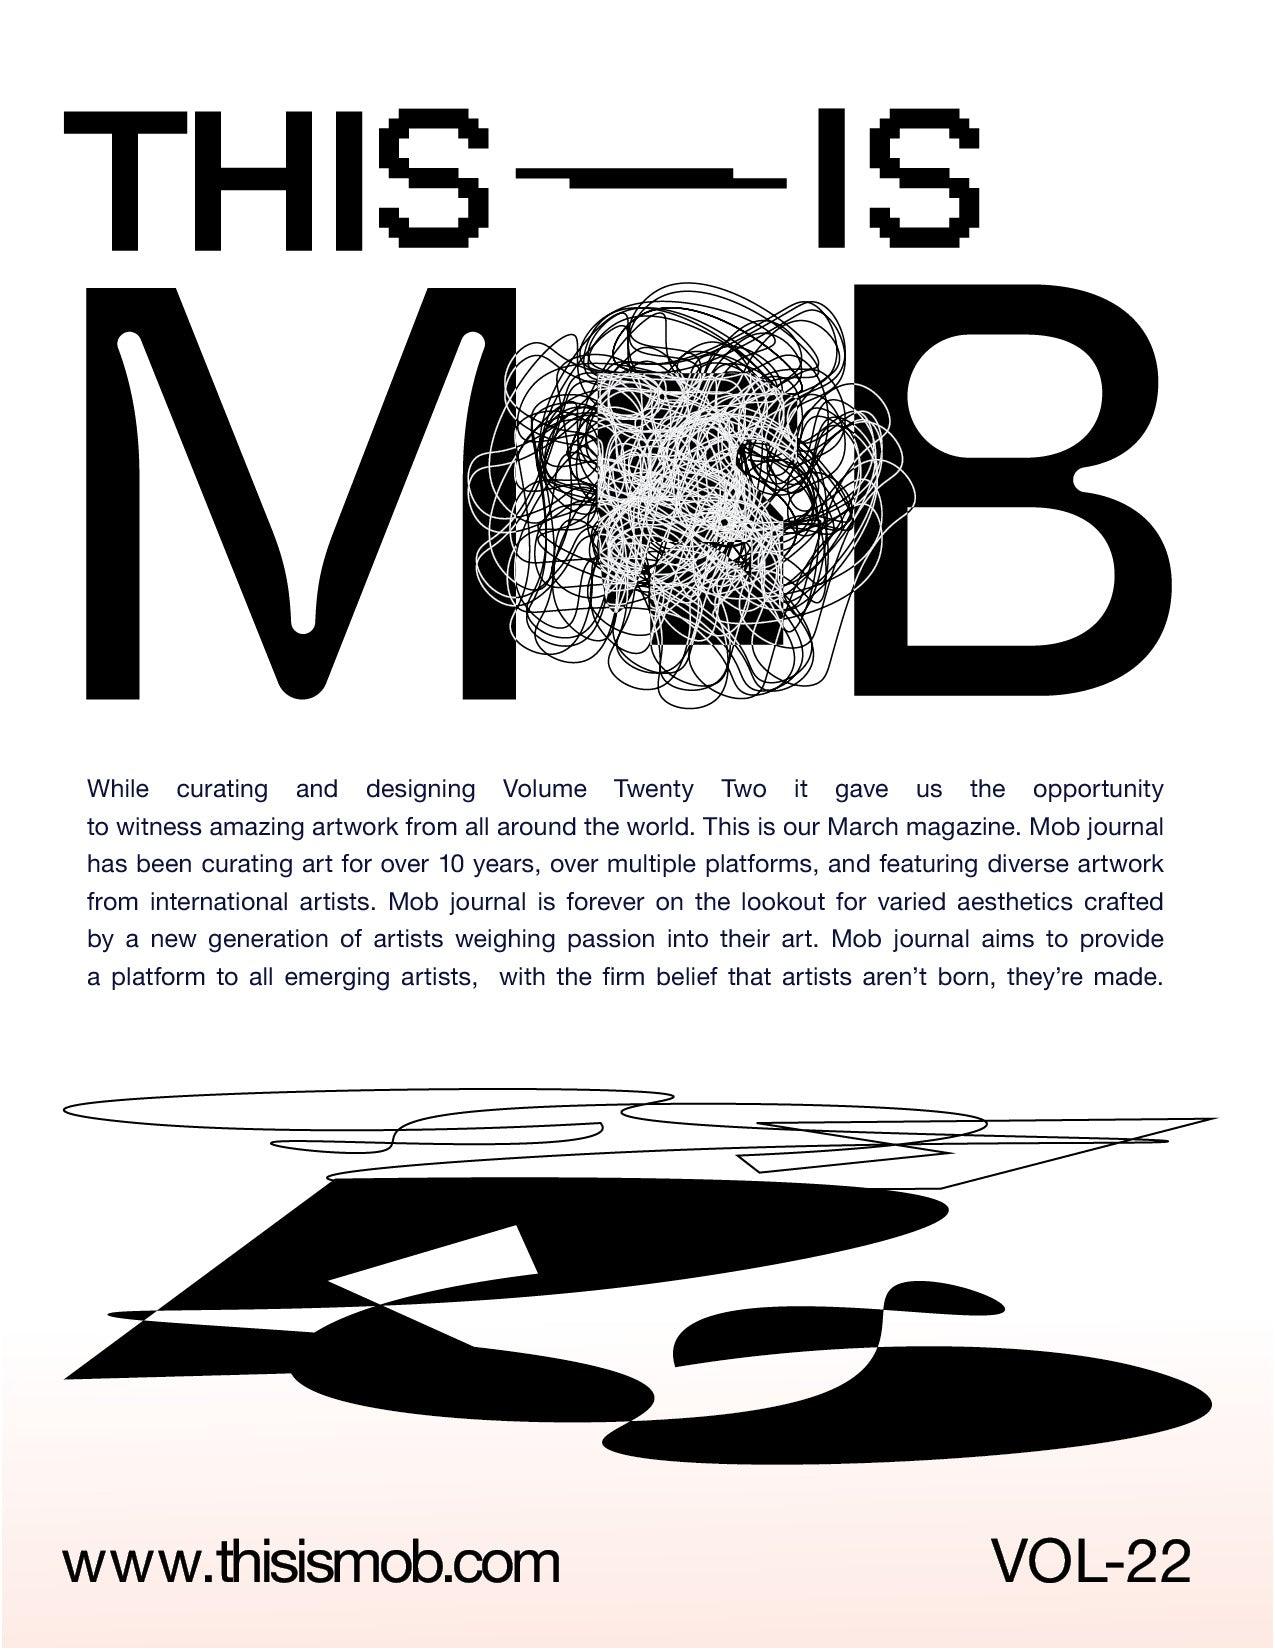 MOB JOURNAL | VOLUME TWENTY TWO | ISSUE #09 - Mob Journal